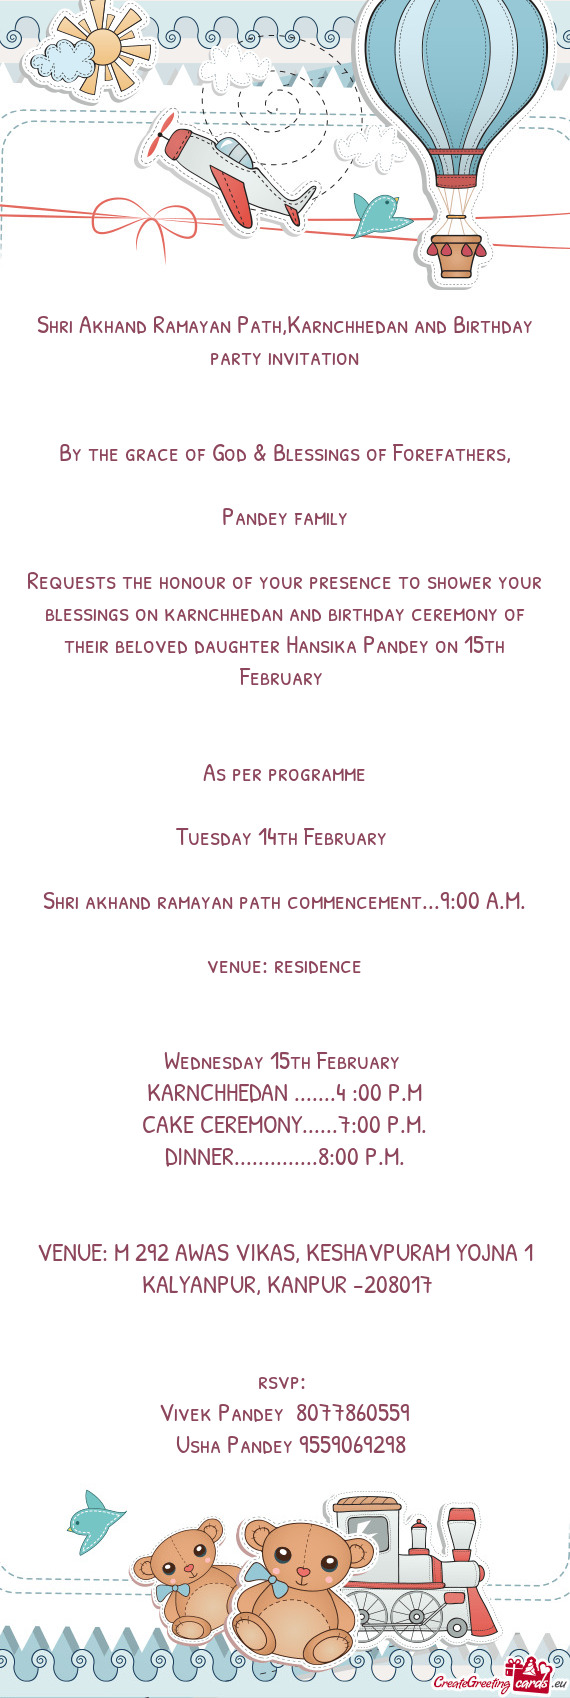 Shri Akhand Ramayan Path,Karnchhedan and Birthday party invitation